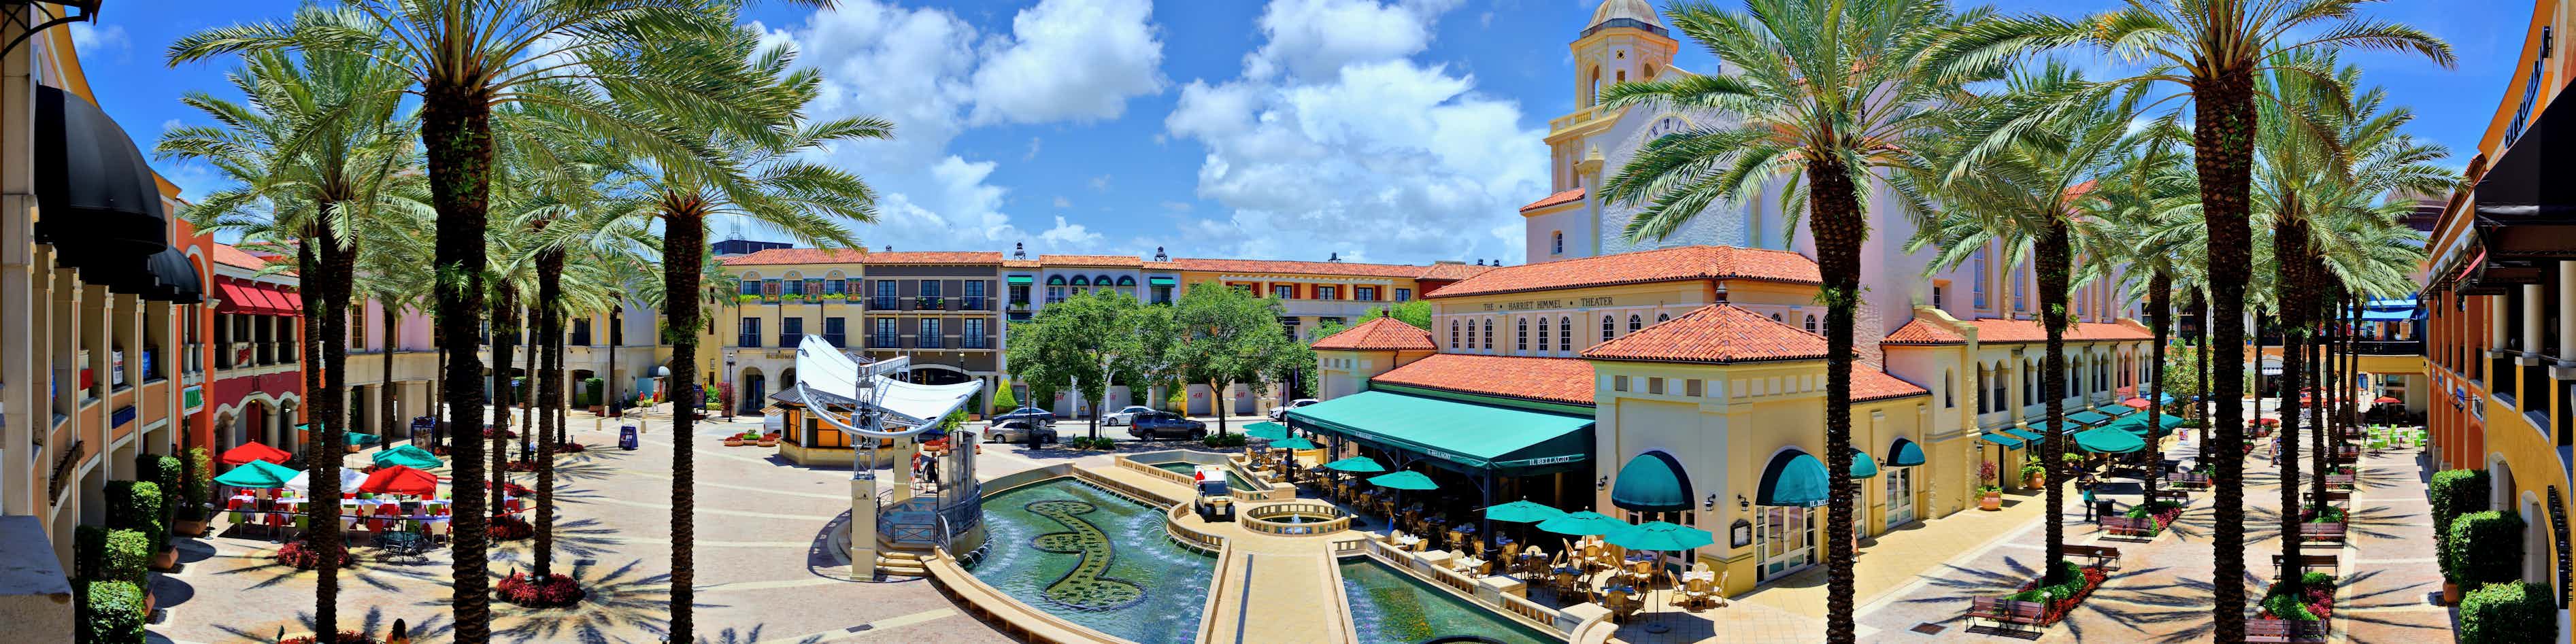 Palm Beach Gardens Florida Panorama Downtown